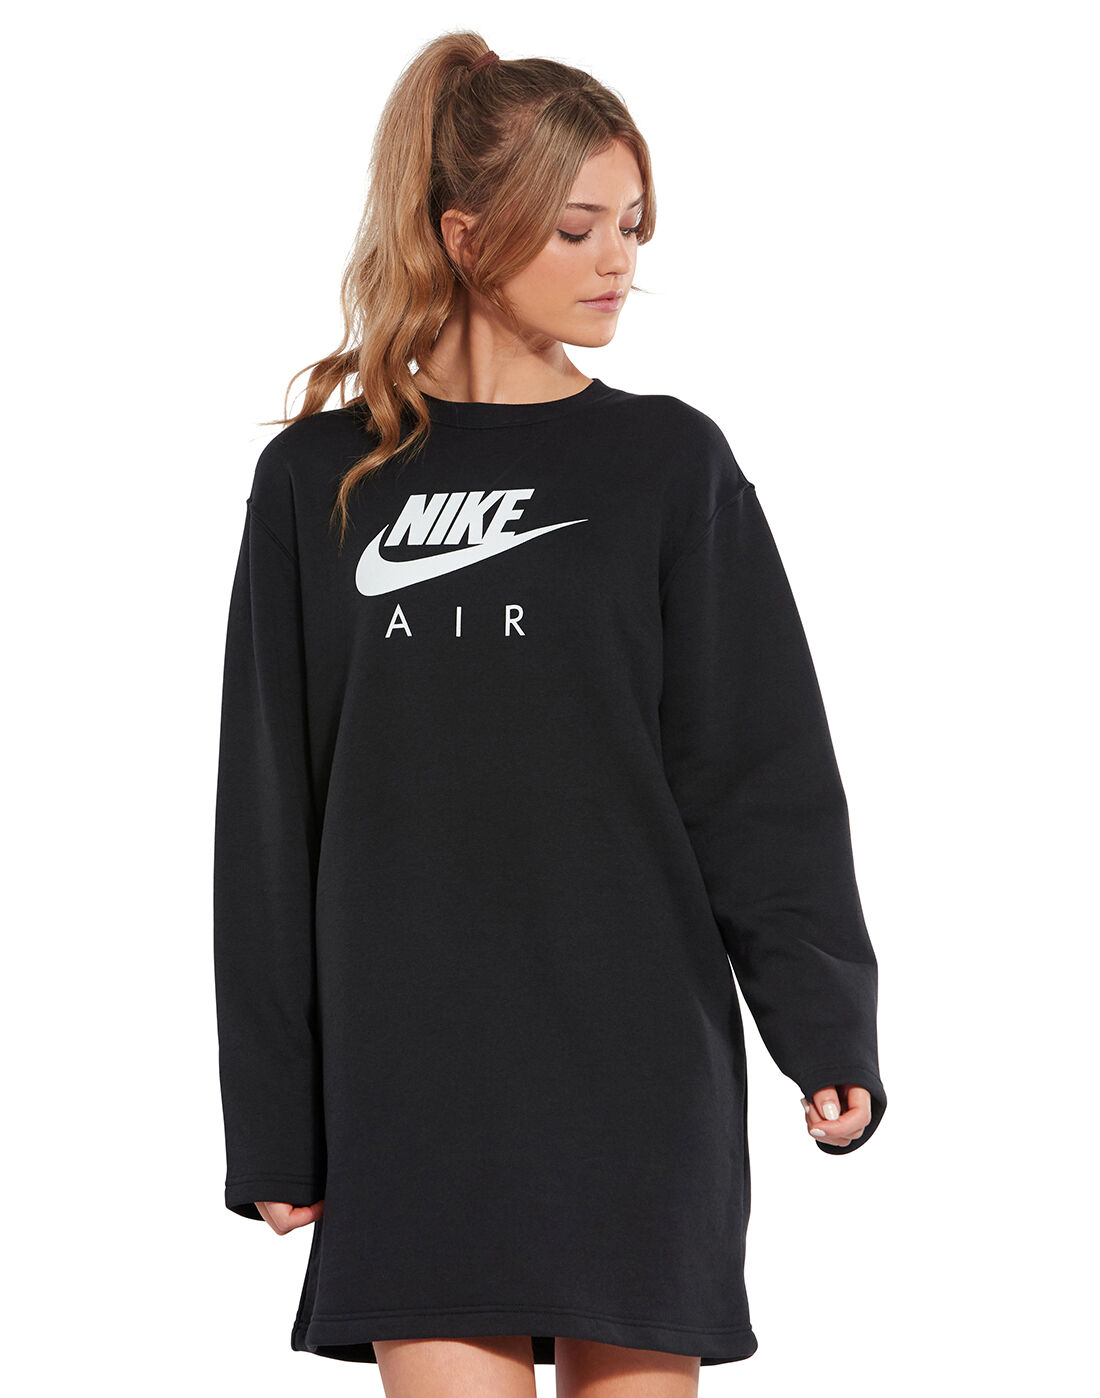 Nike Womens Air Crew Dress - Black 